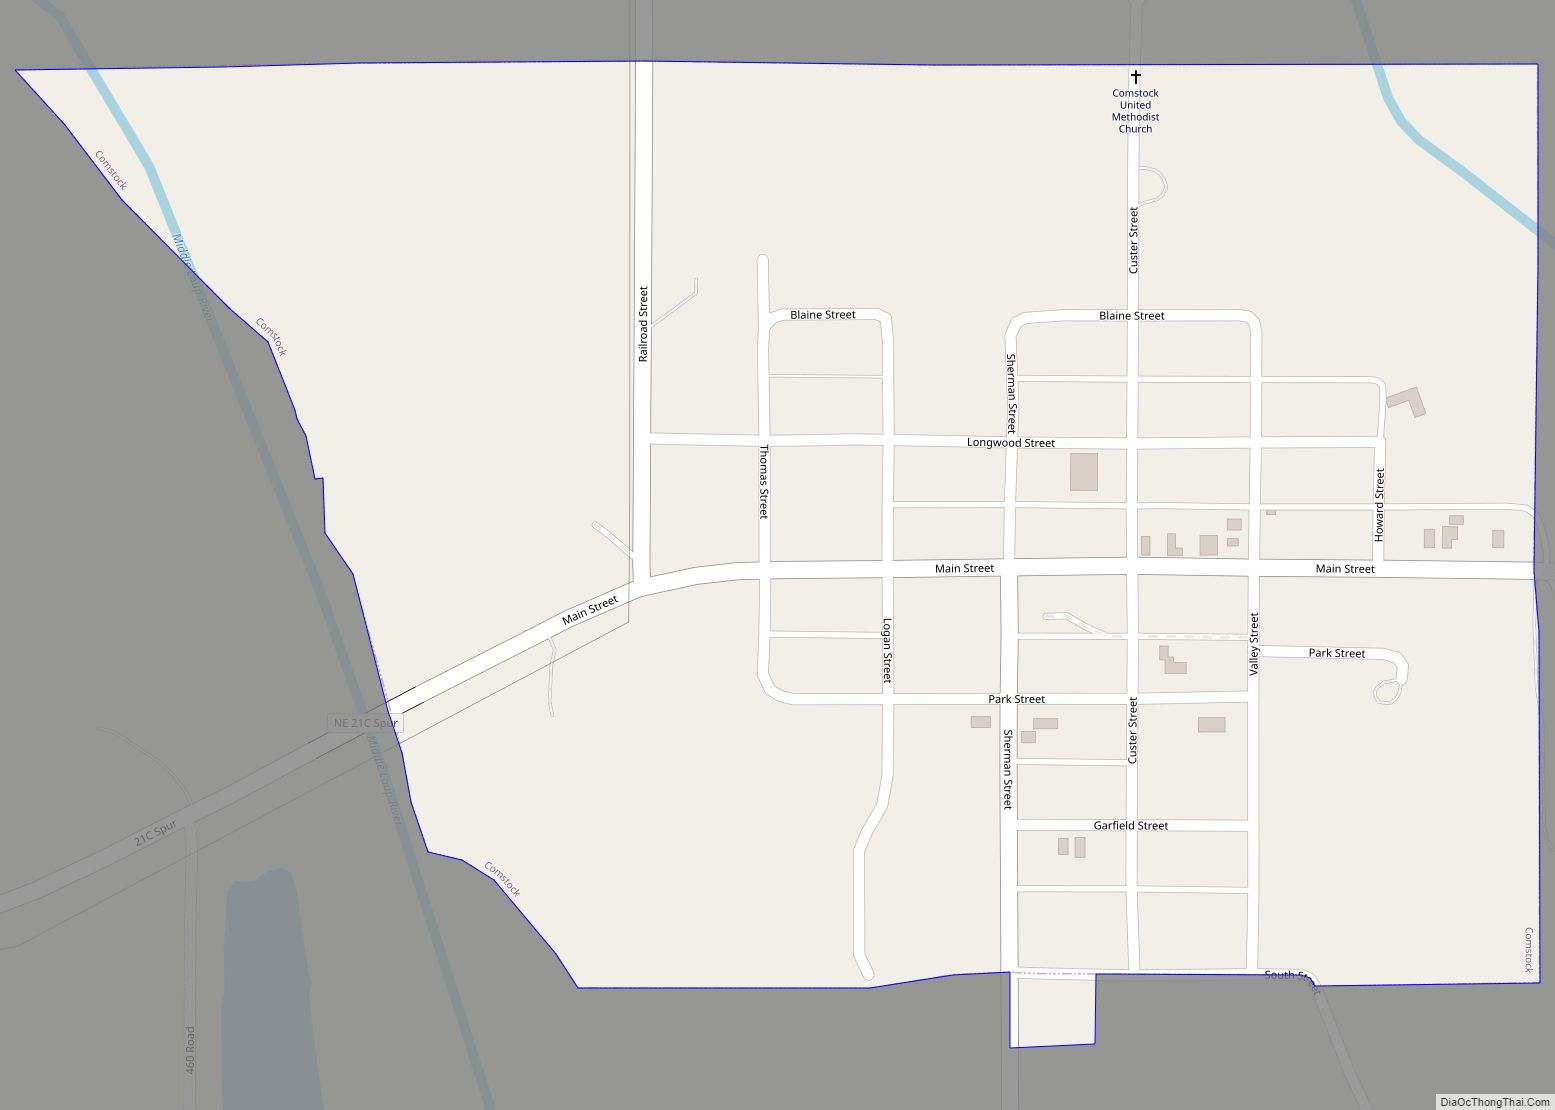 Map of Comstock village, Nebraska